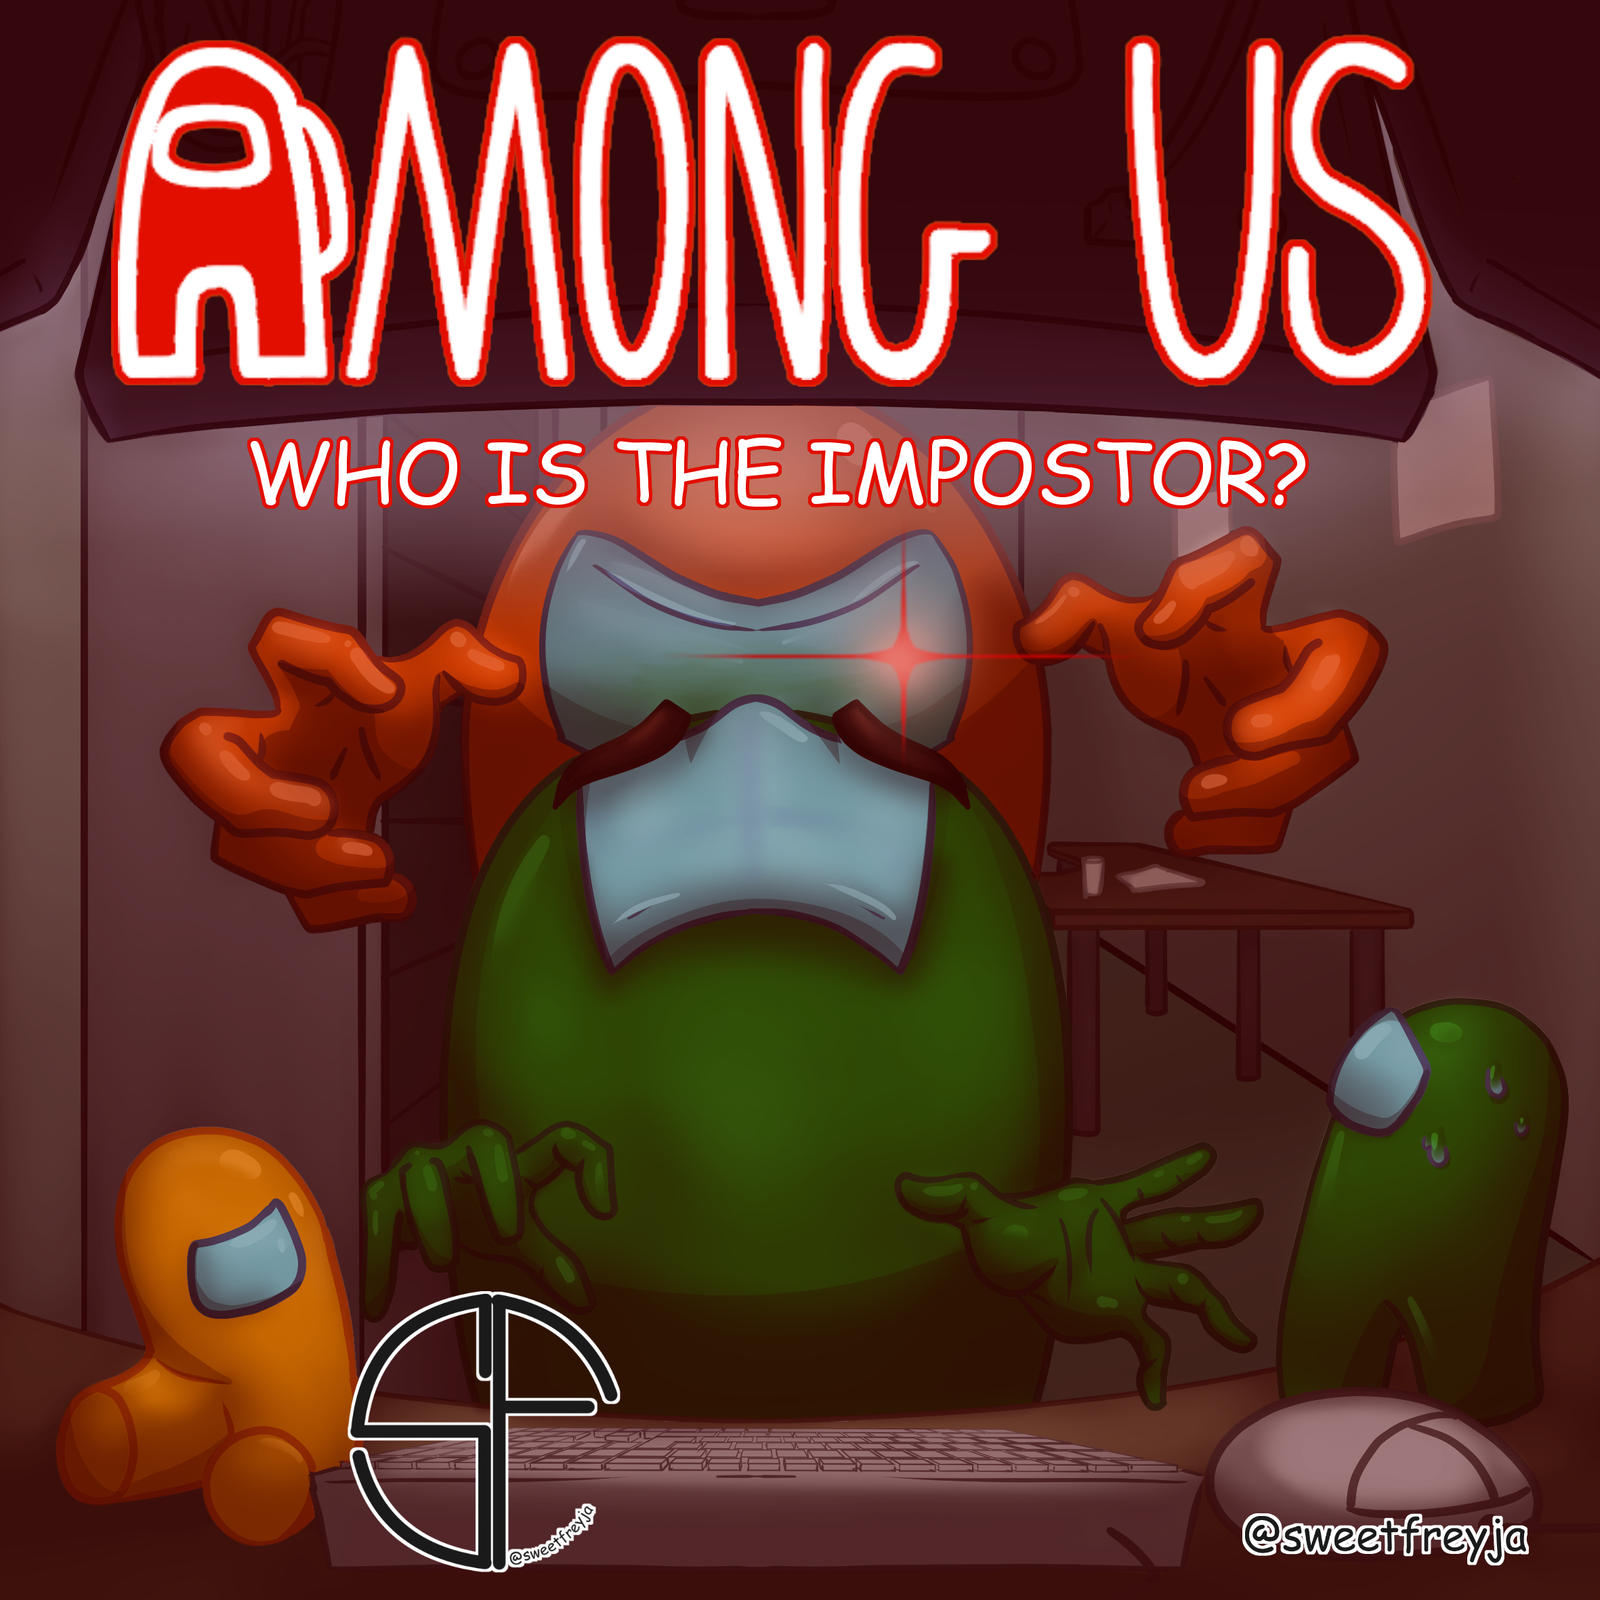 Among us - The impostor? by gavinhunter on DeviantArt